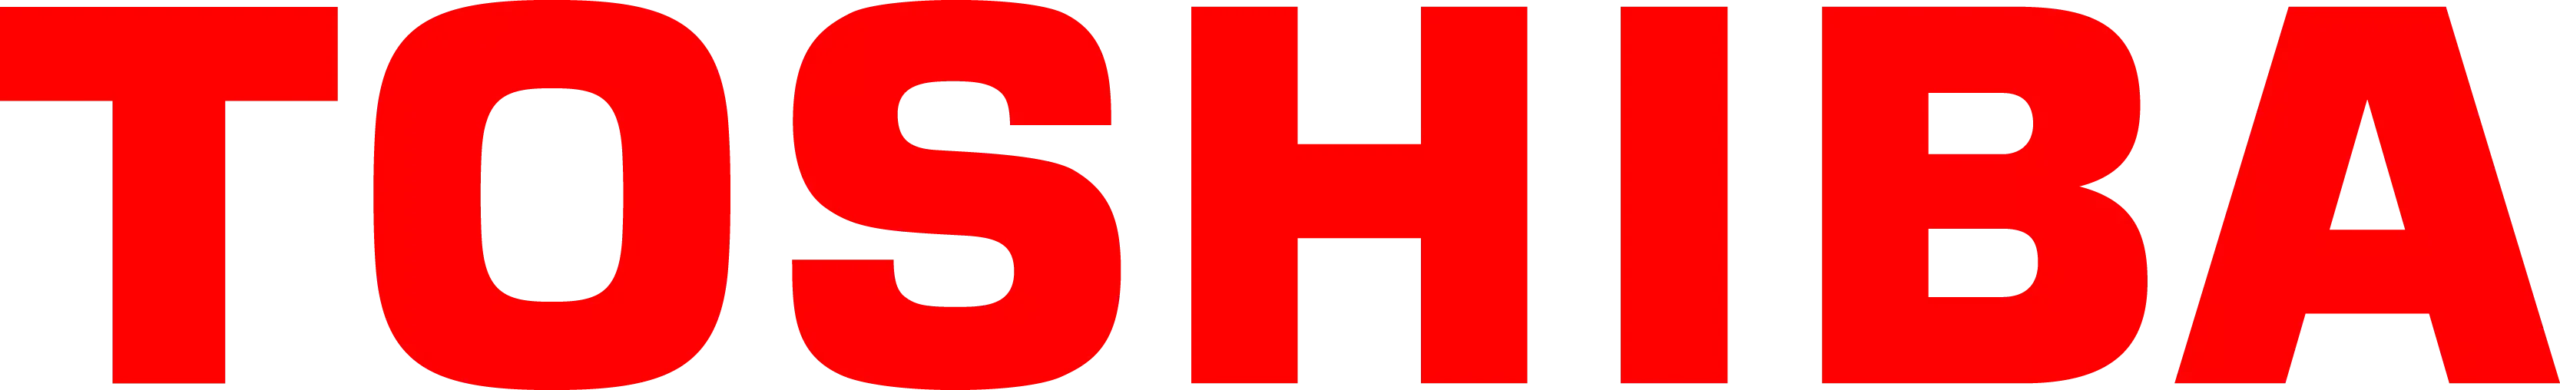 Toshiba_logo copy